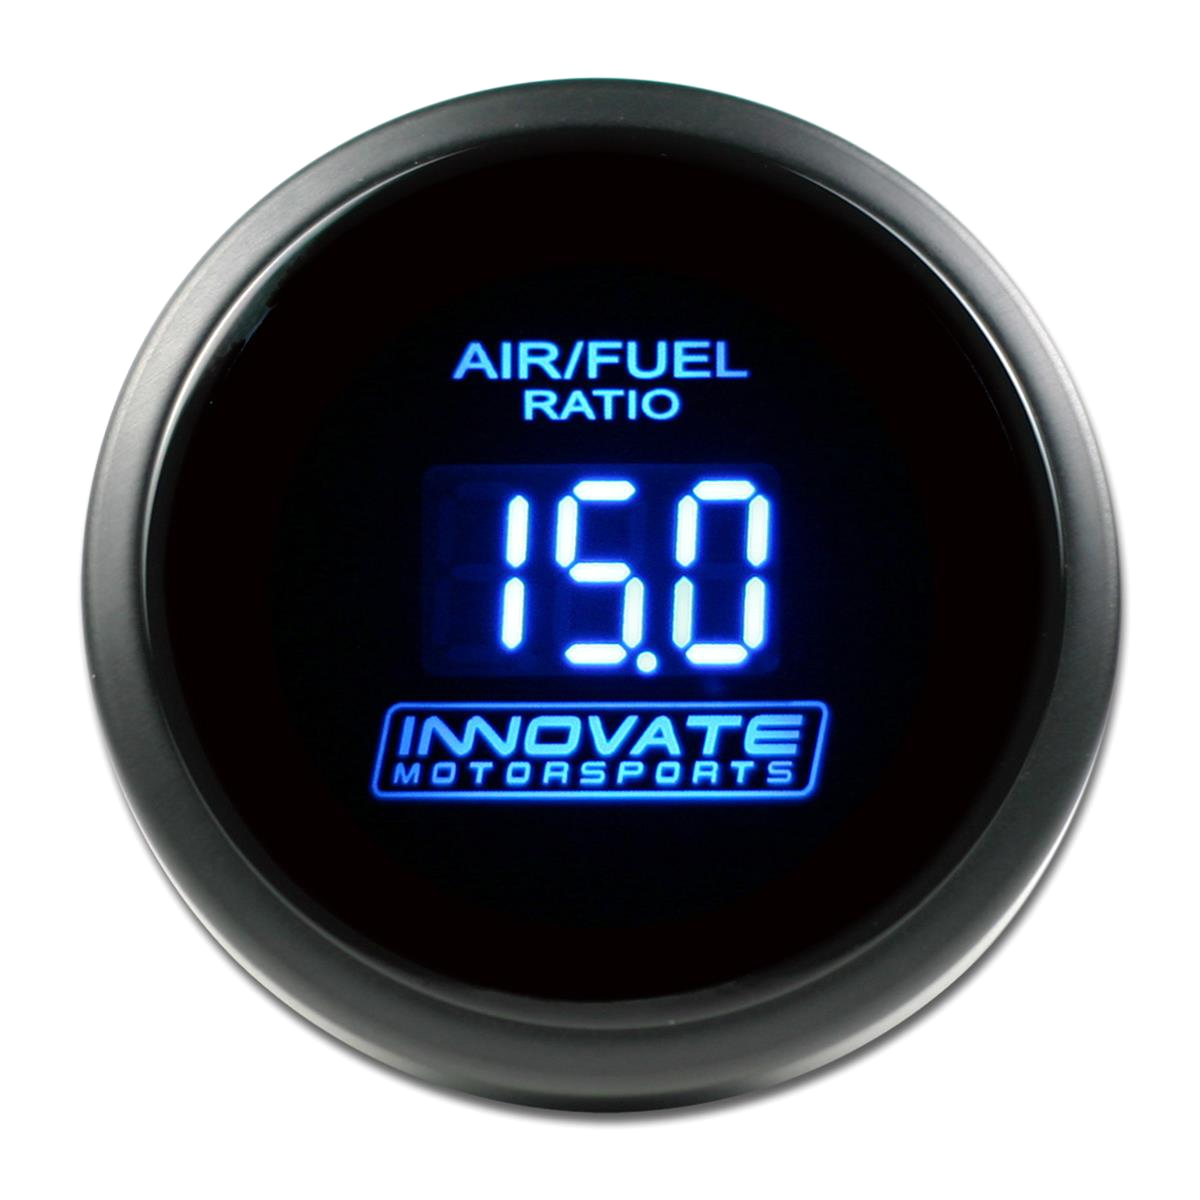 Innovate Motorsports 37950 Air-Fuel Ratio Gauge, DB/LC-2, Wideband, 8:1-18:1 AFR, Electric, Digital, 2-1/16 in Diameter, Black Face Blue LED, Kit